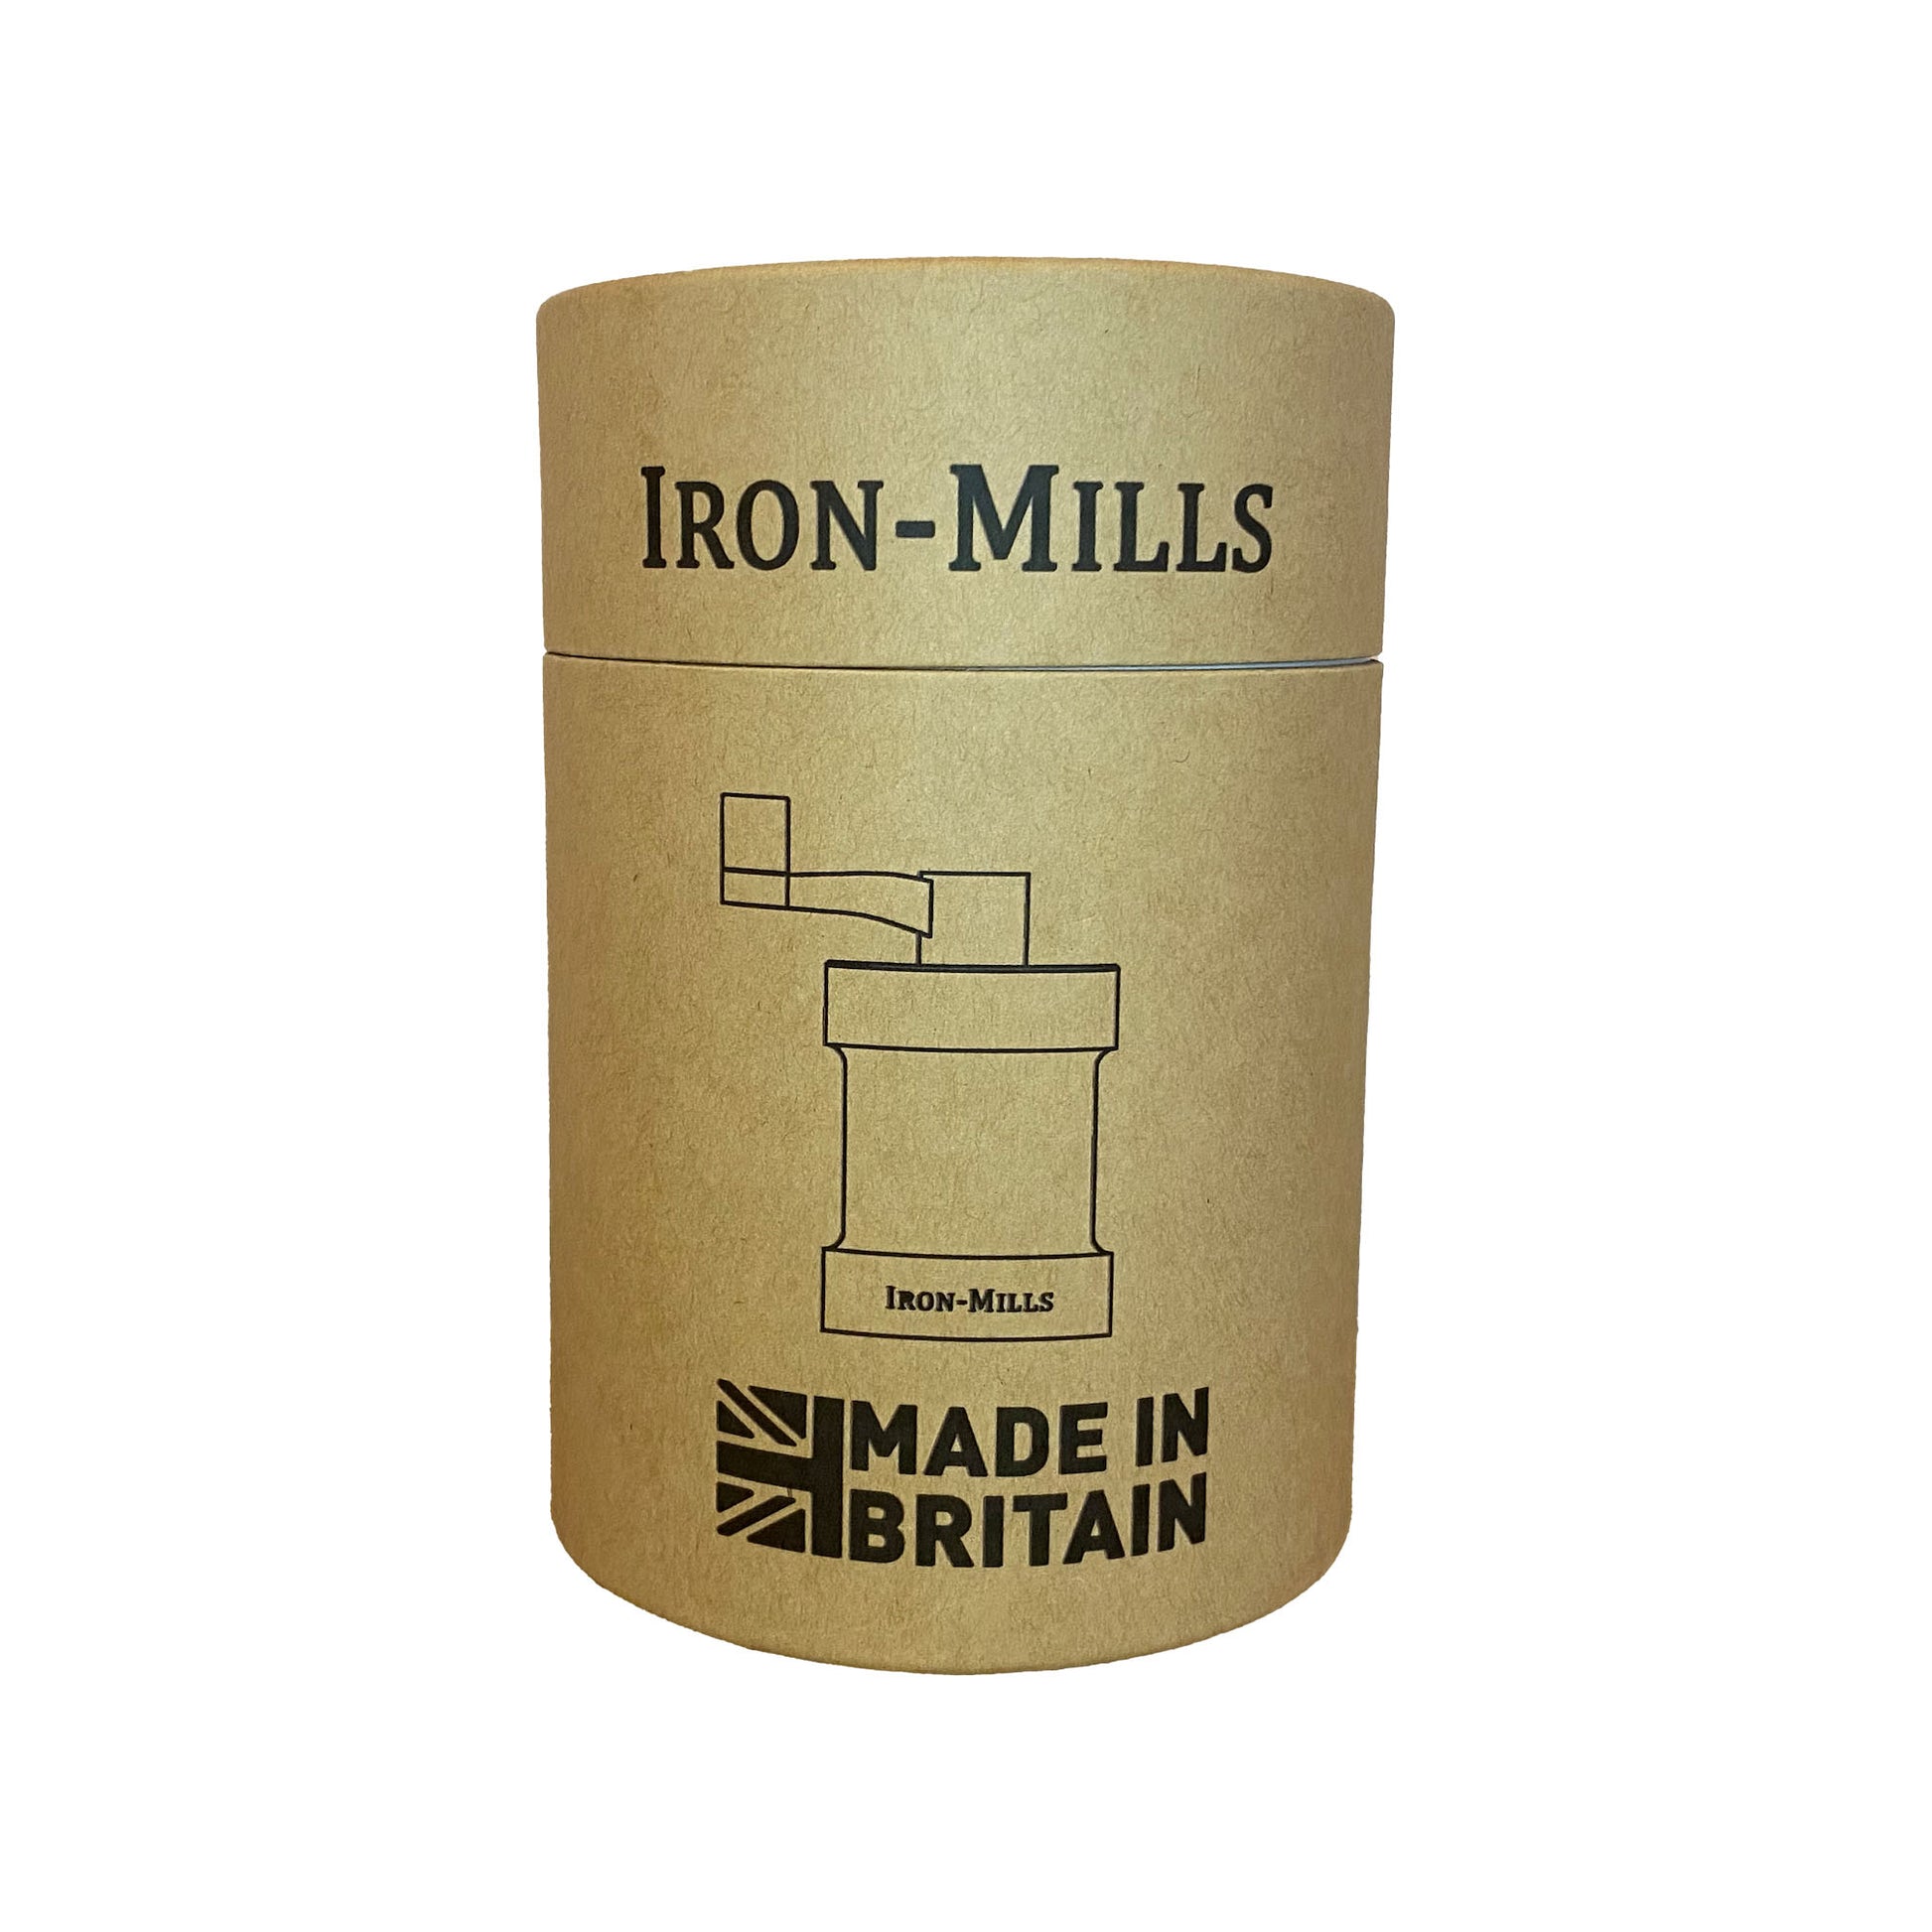 Iron-Mills, Quality Cast Iron Salt & Pepper Mills